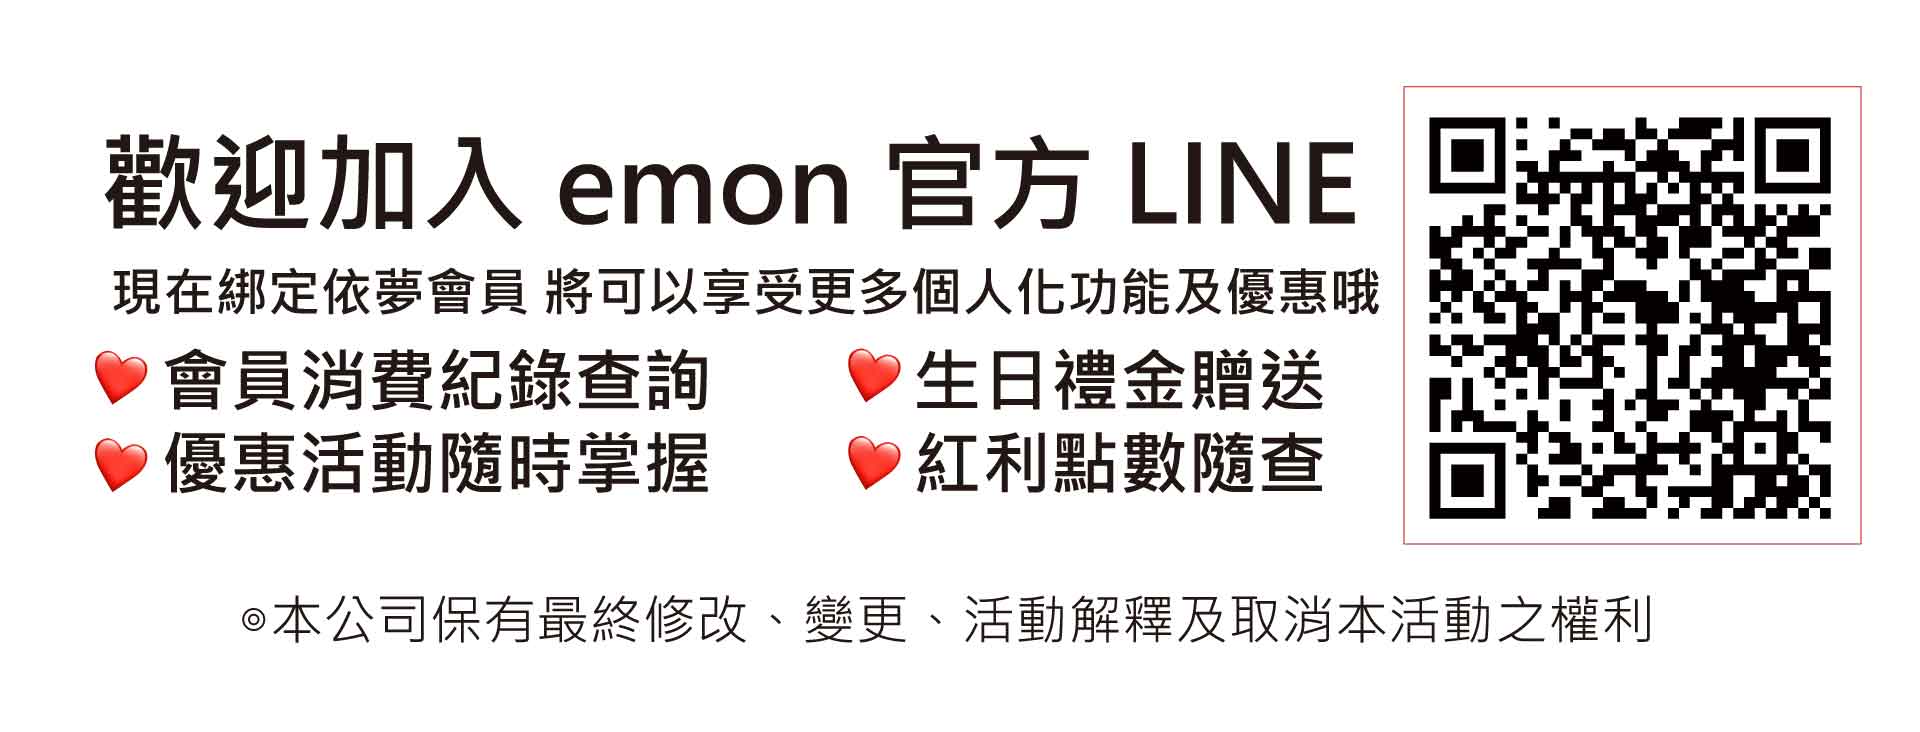 emon-歡迎加入LINE